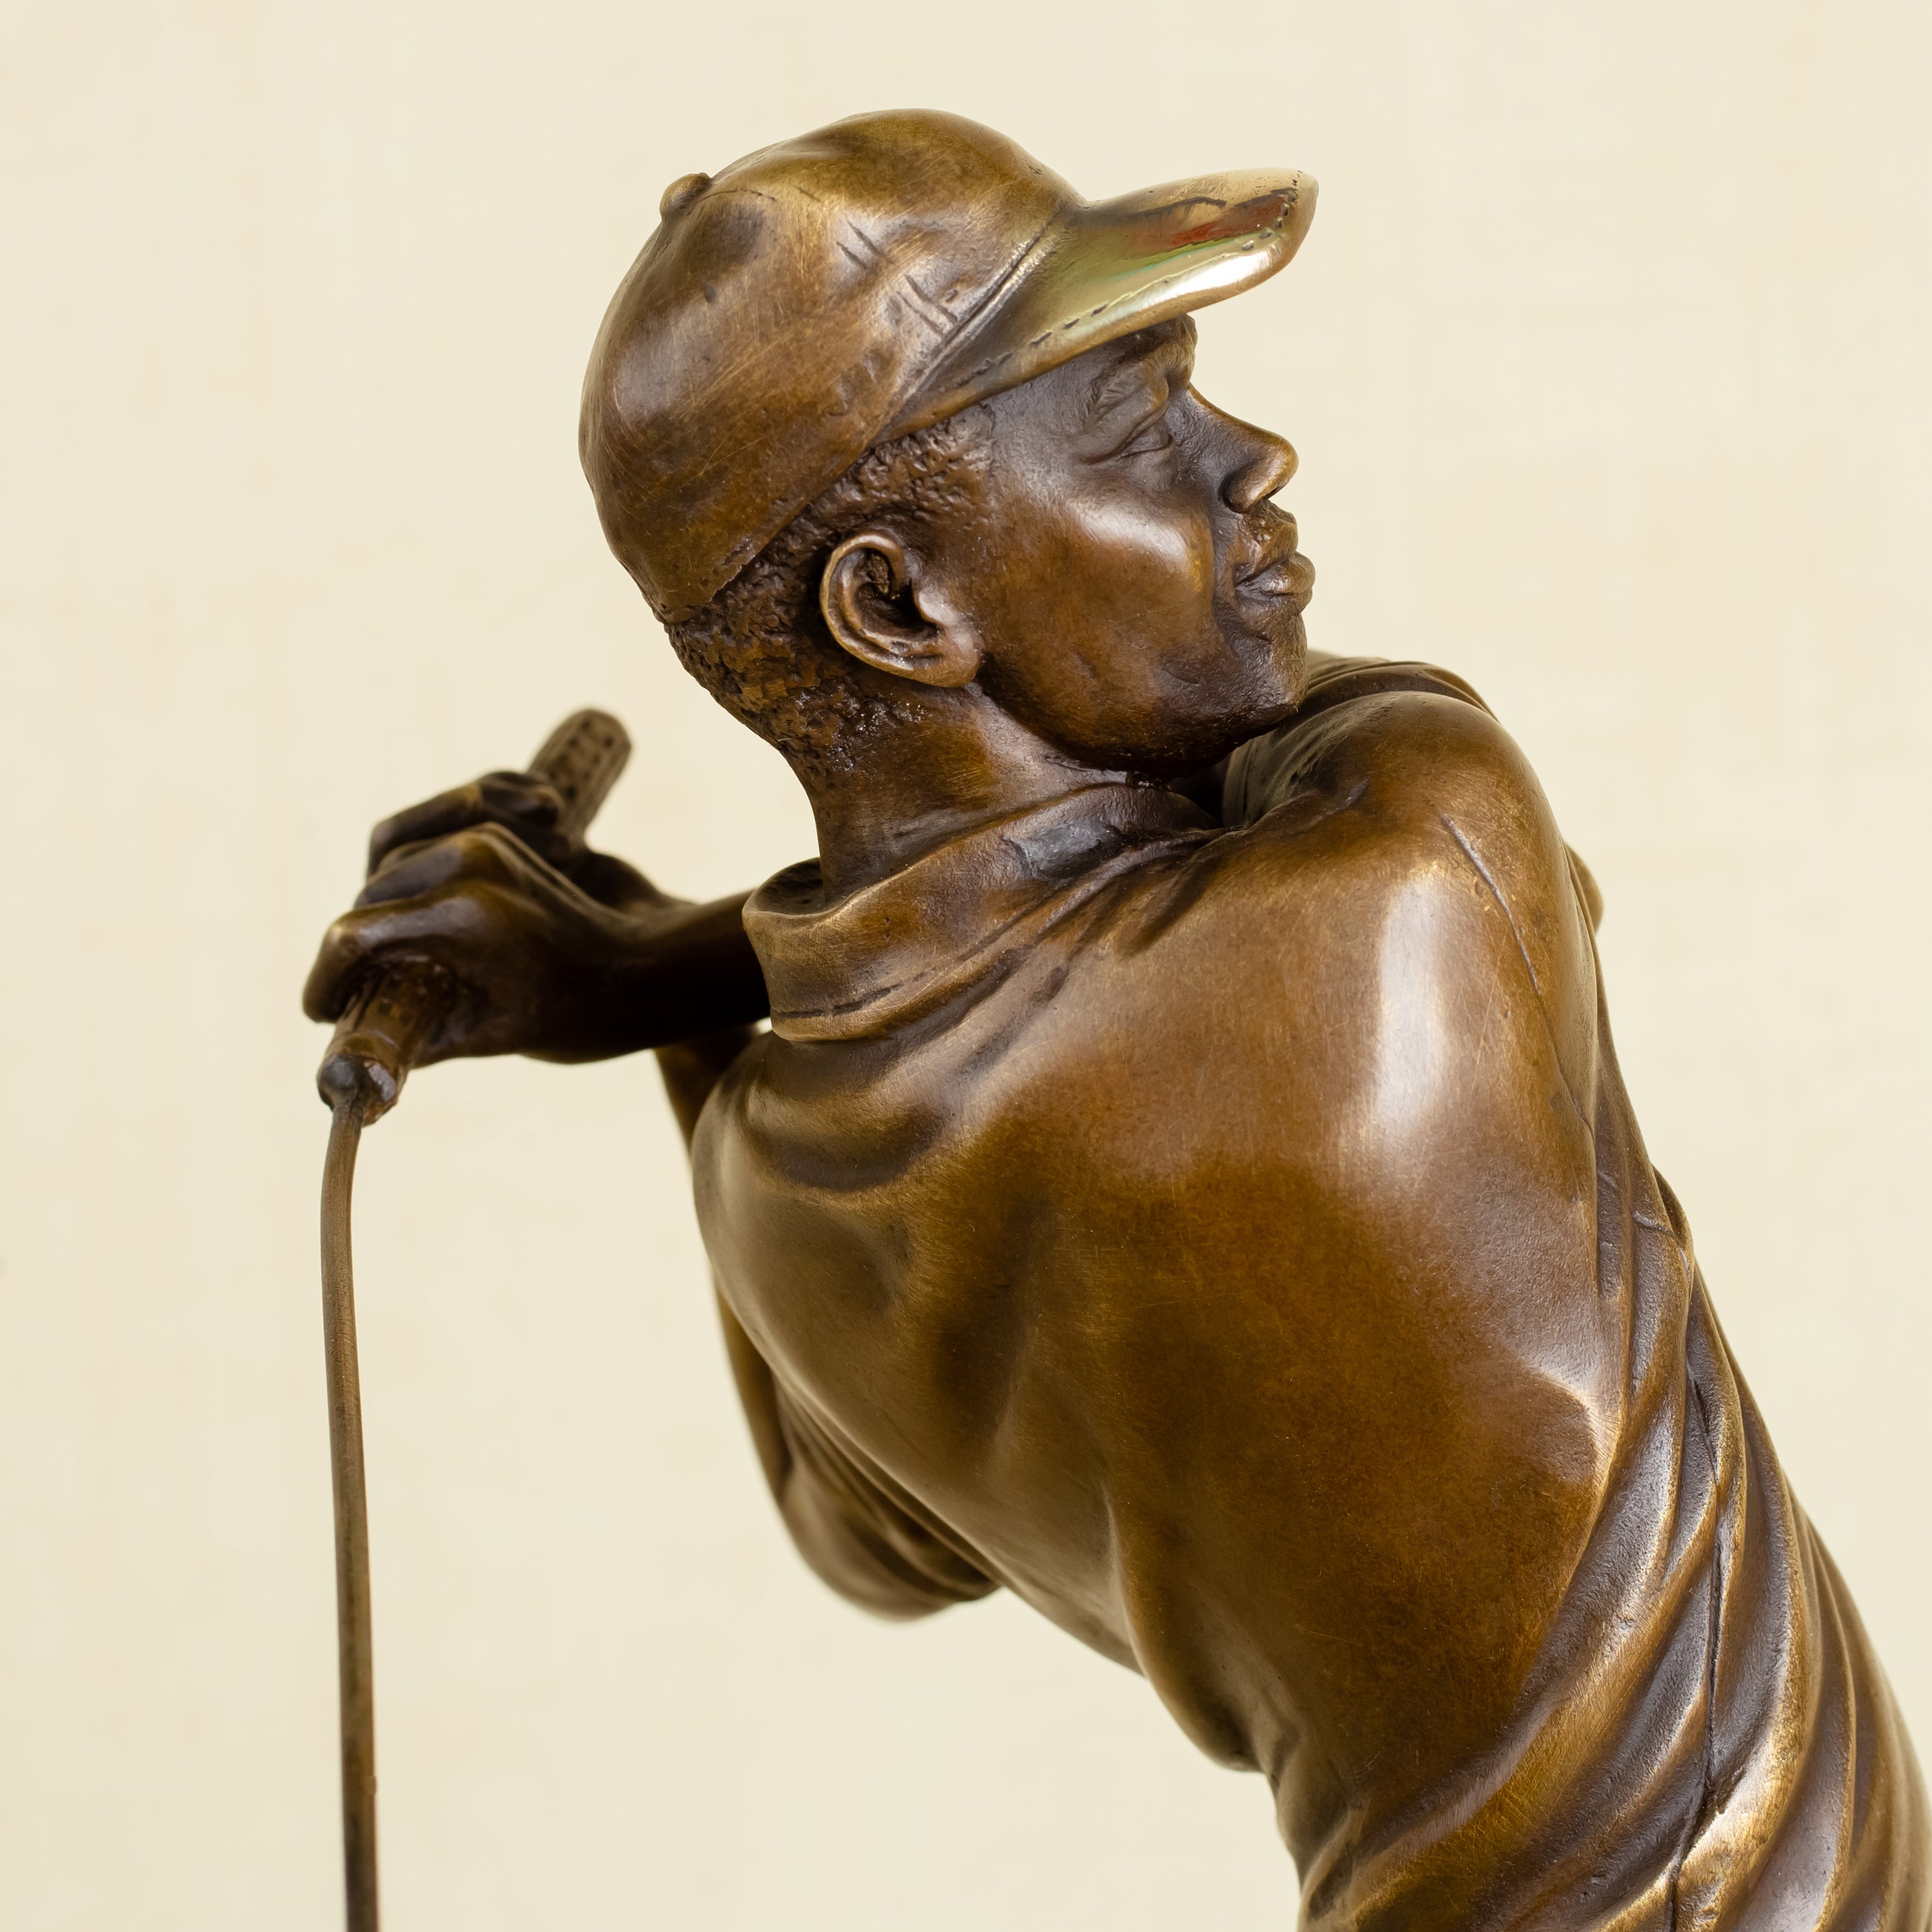 58cm Bronze Golf Man Statue Playing Golf Sculpture Bronze Golfer Art Figurine Bronze Casting Crafts Ornament For Home Decor Gift